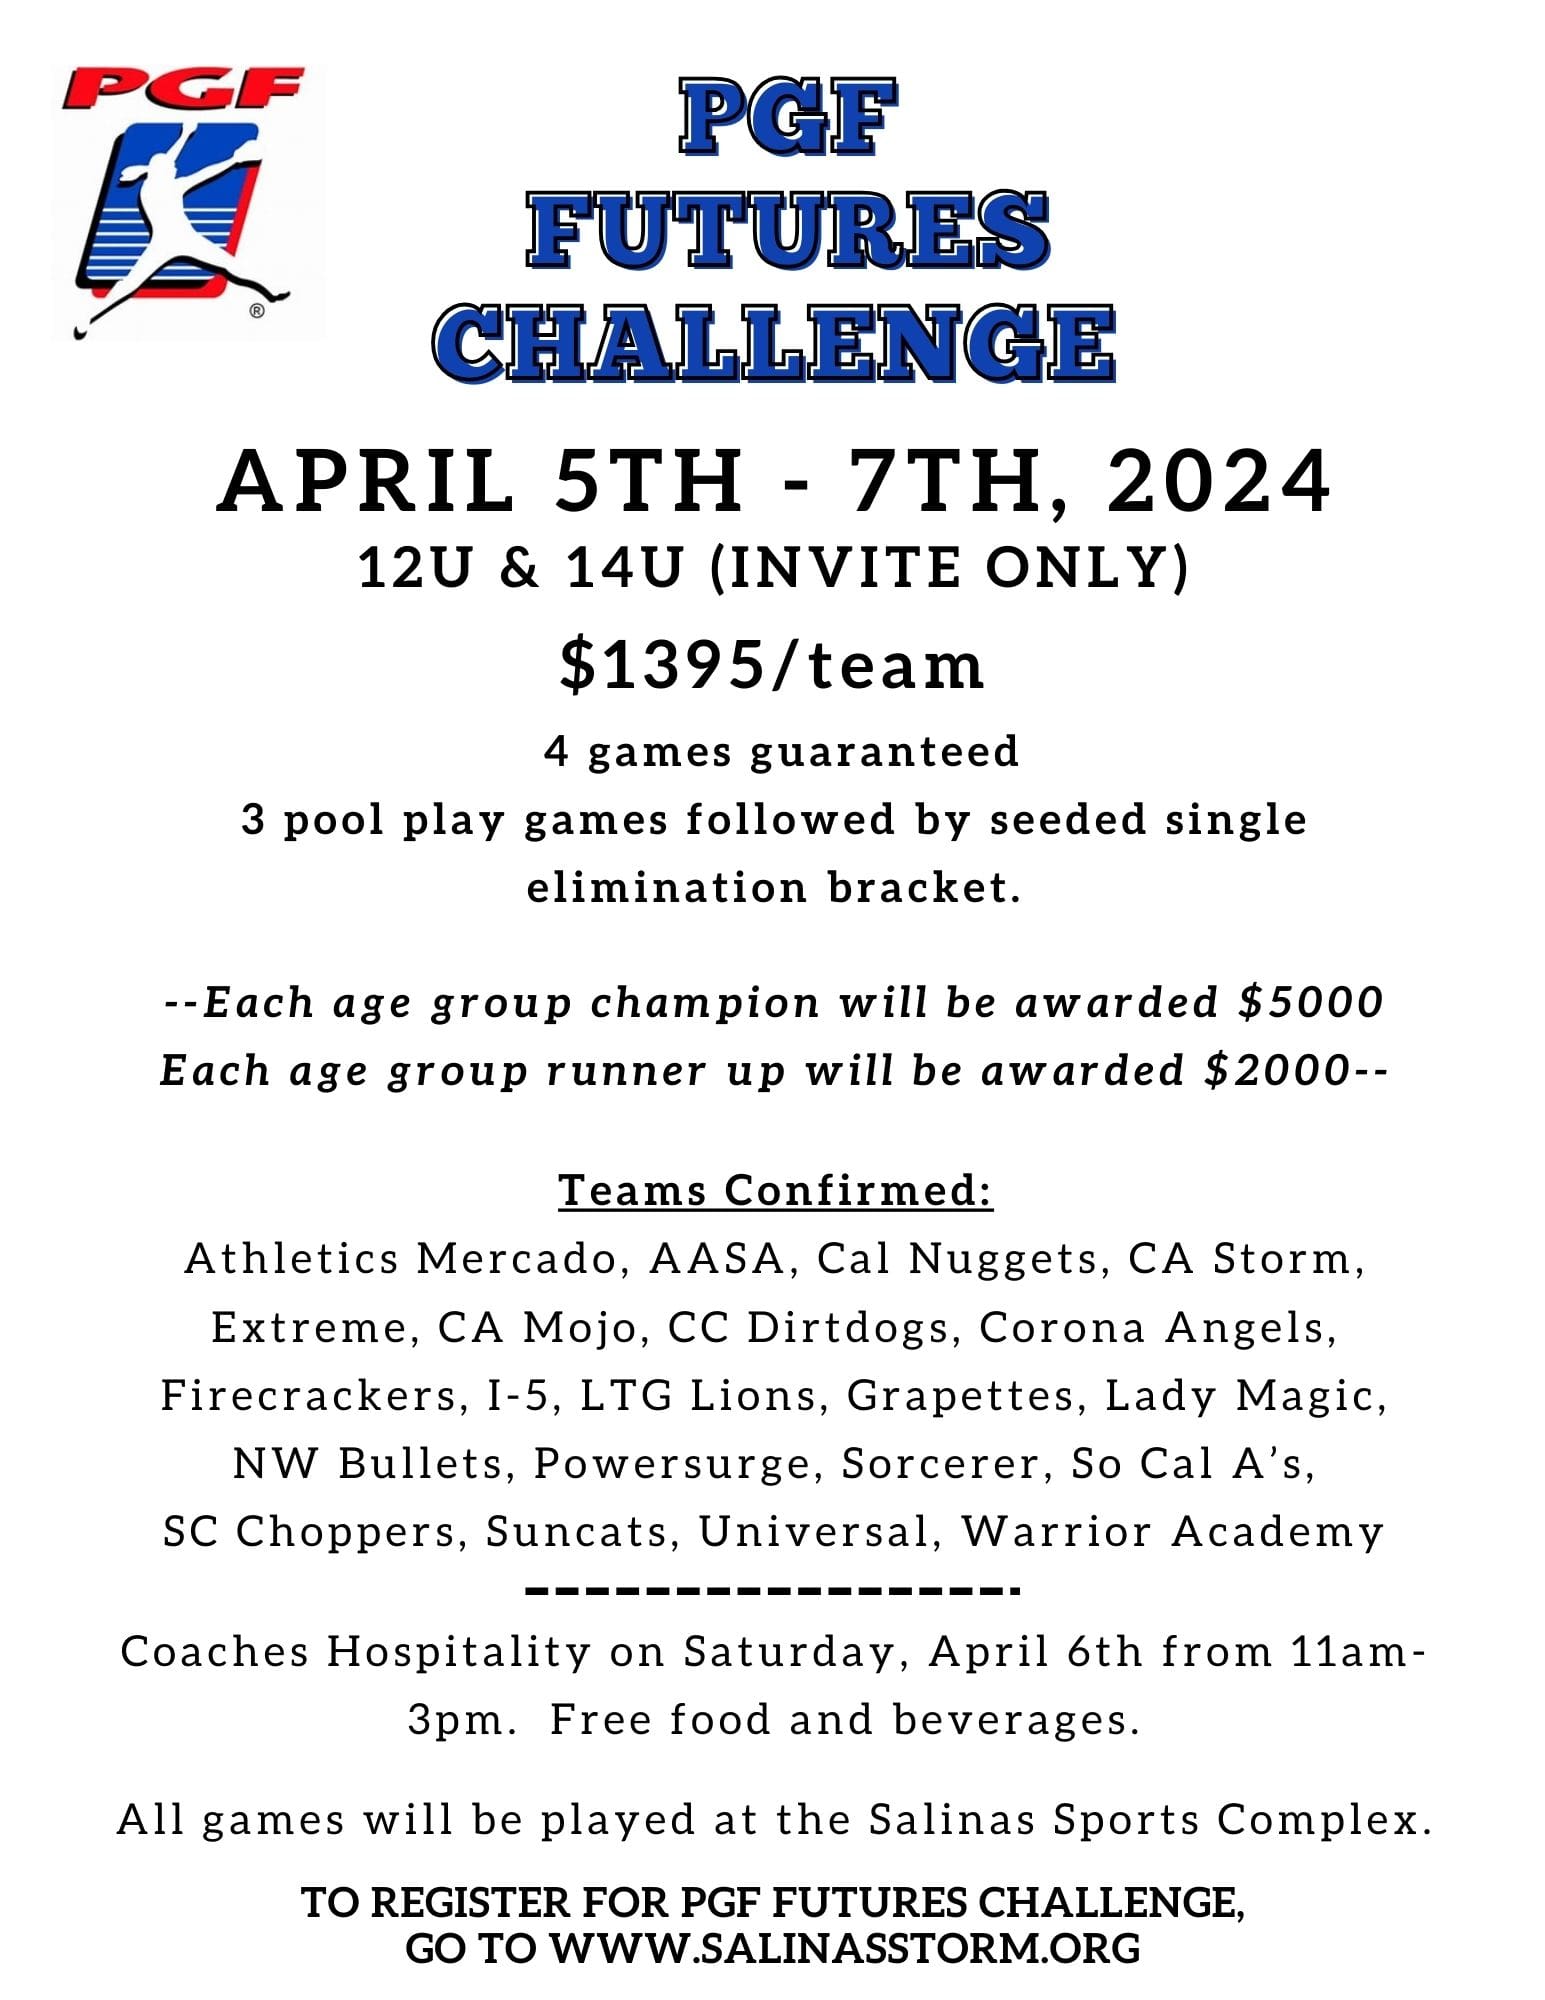 PGF Futures Challenge flyer-teams